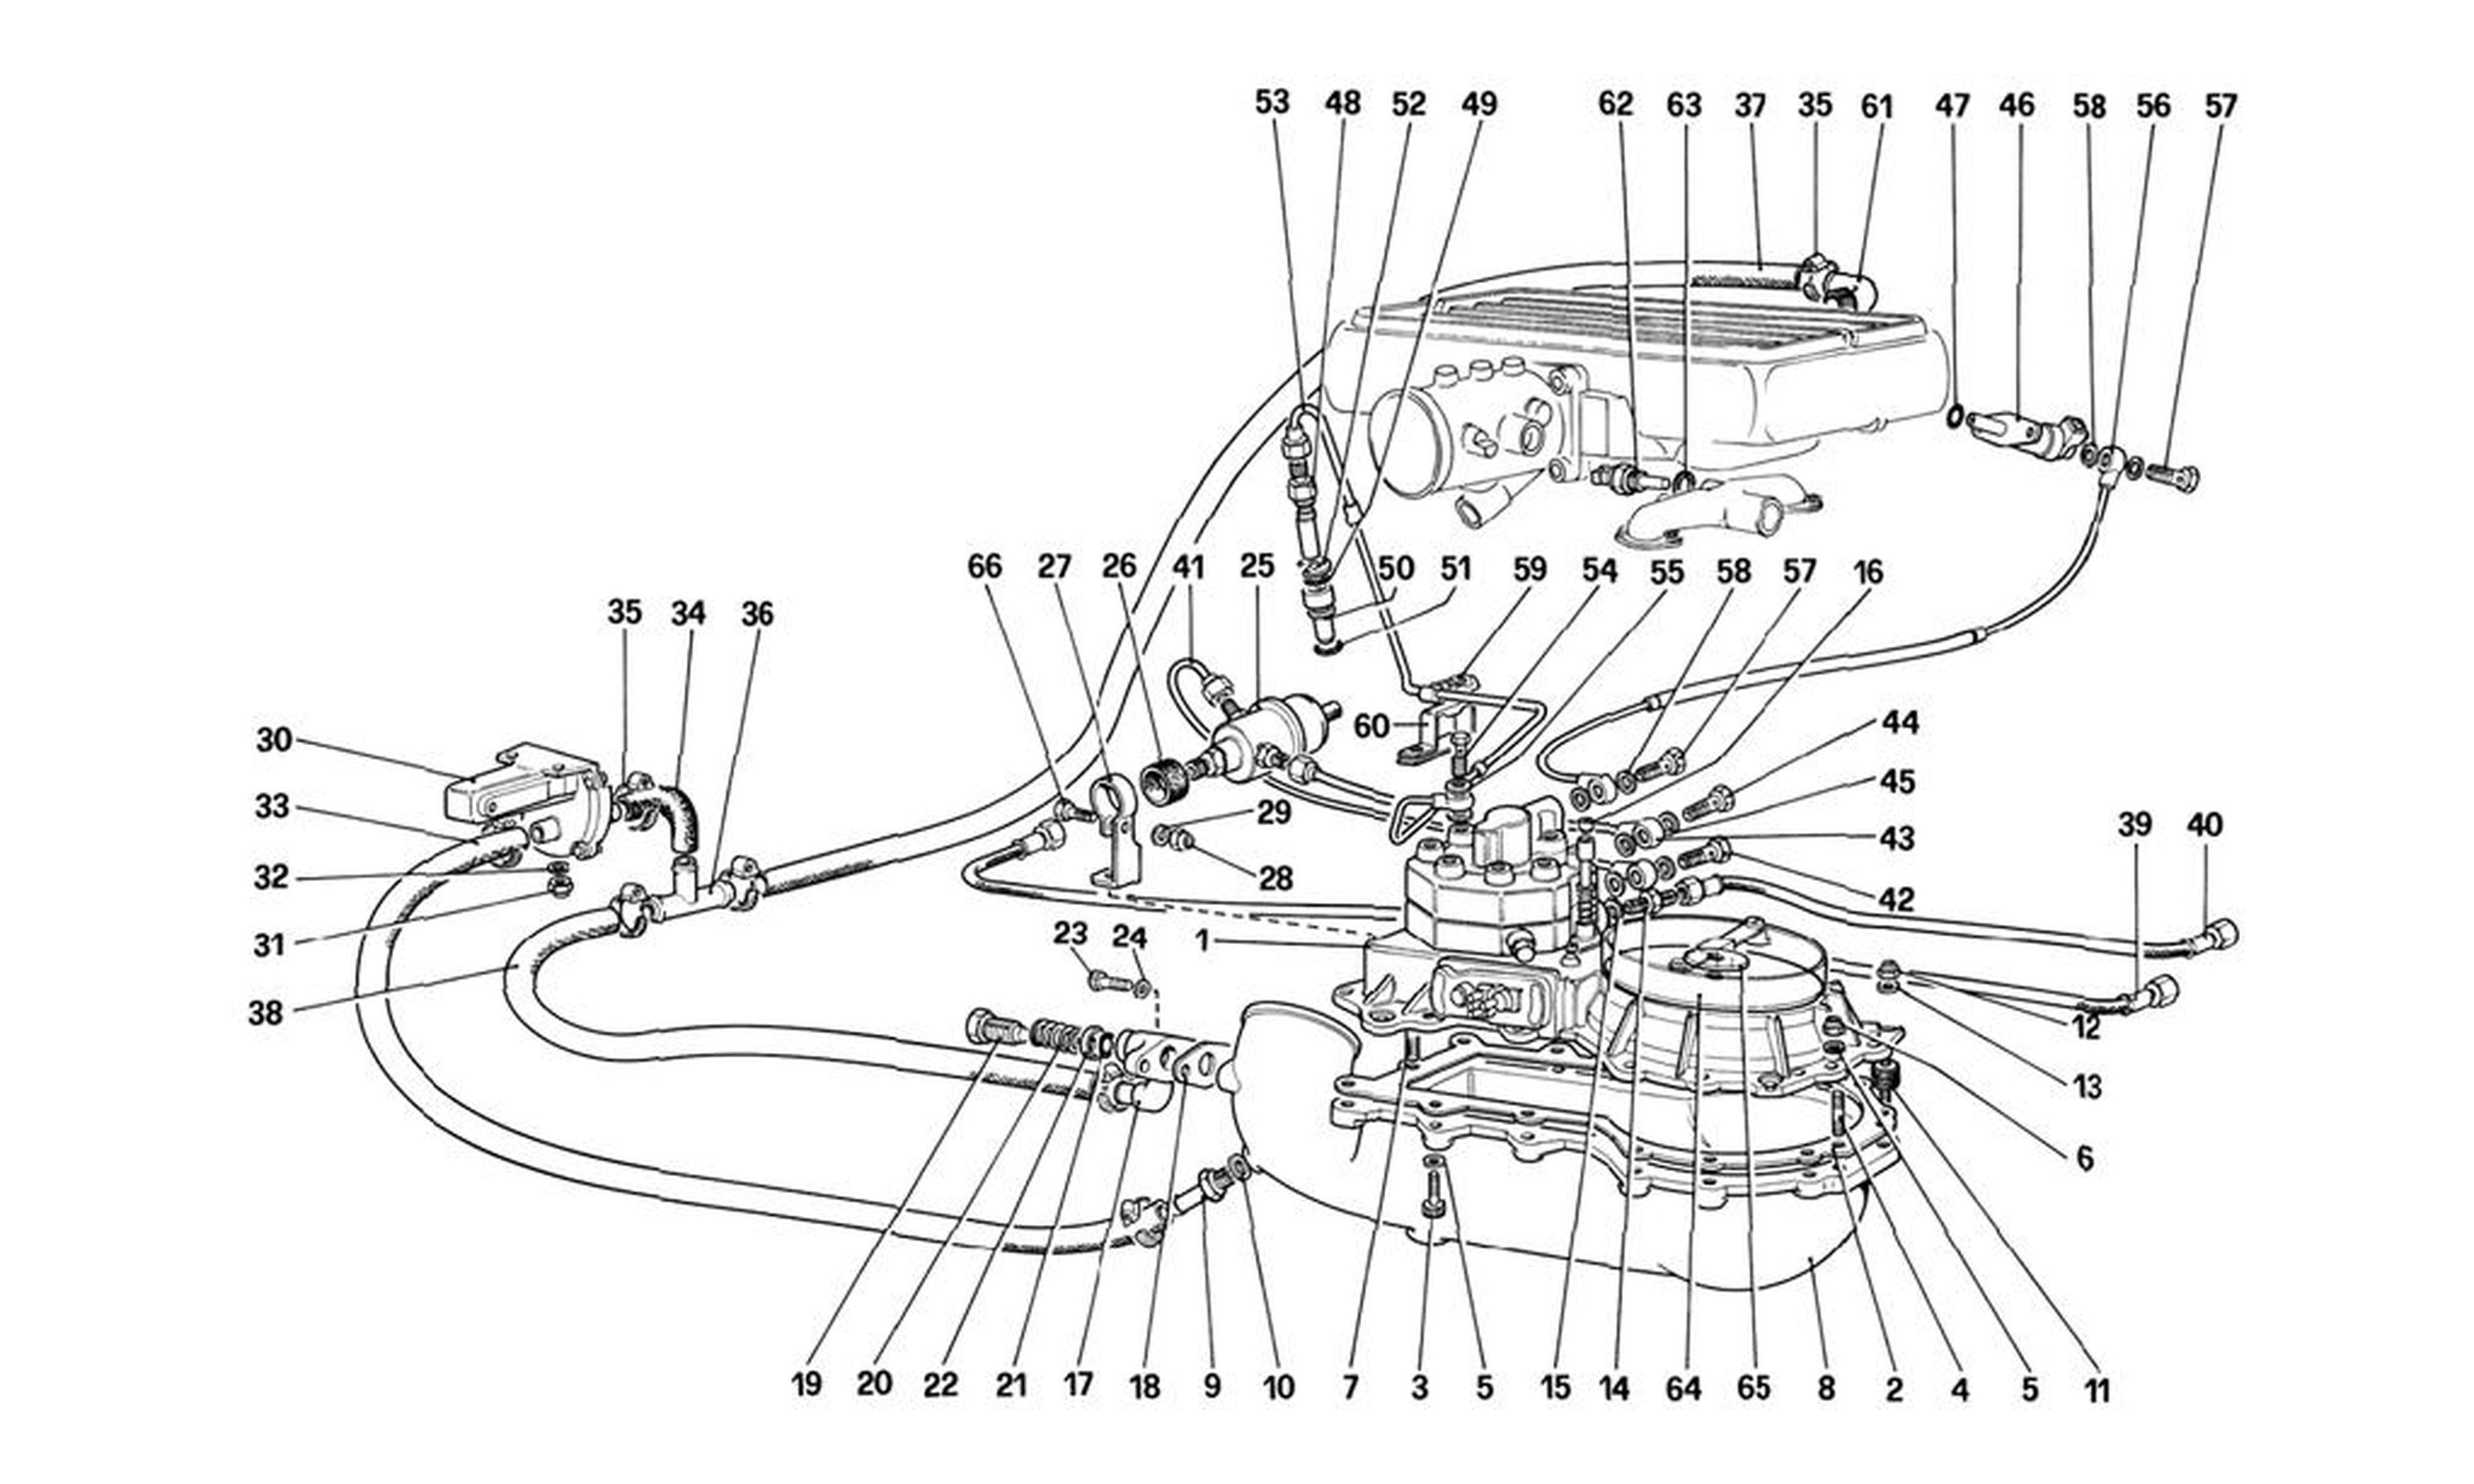 Schematic: Fuel Distributors Lines (For Ch87 Version)